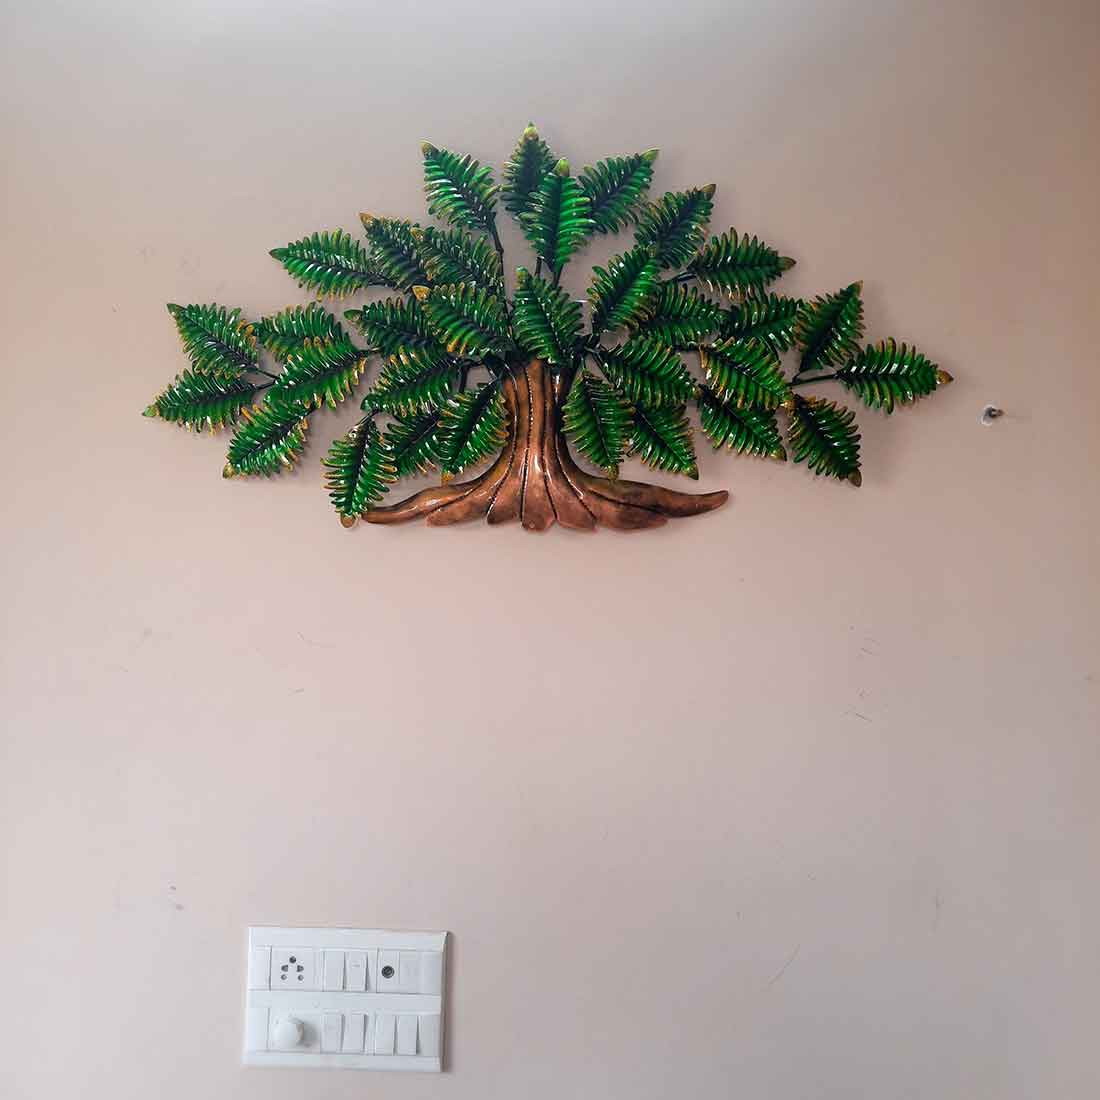 Metal Wall Art - Green Tree Design - Wall Art for Living Room - 18 Inch - ApkaMart